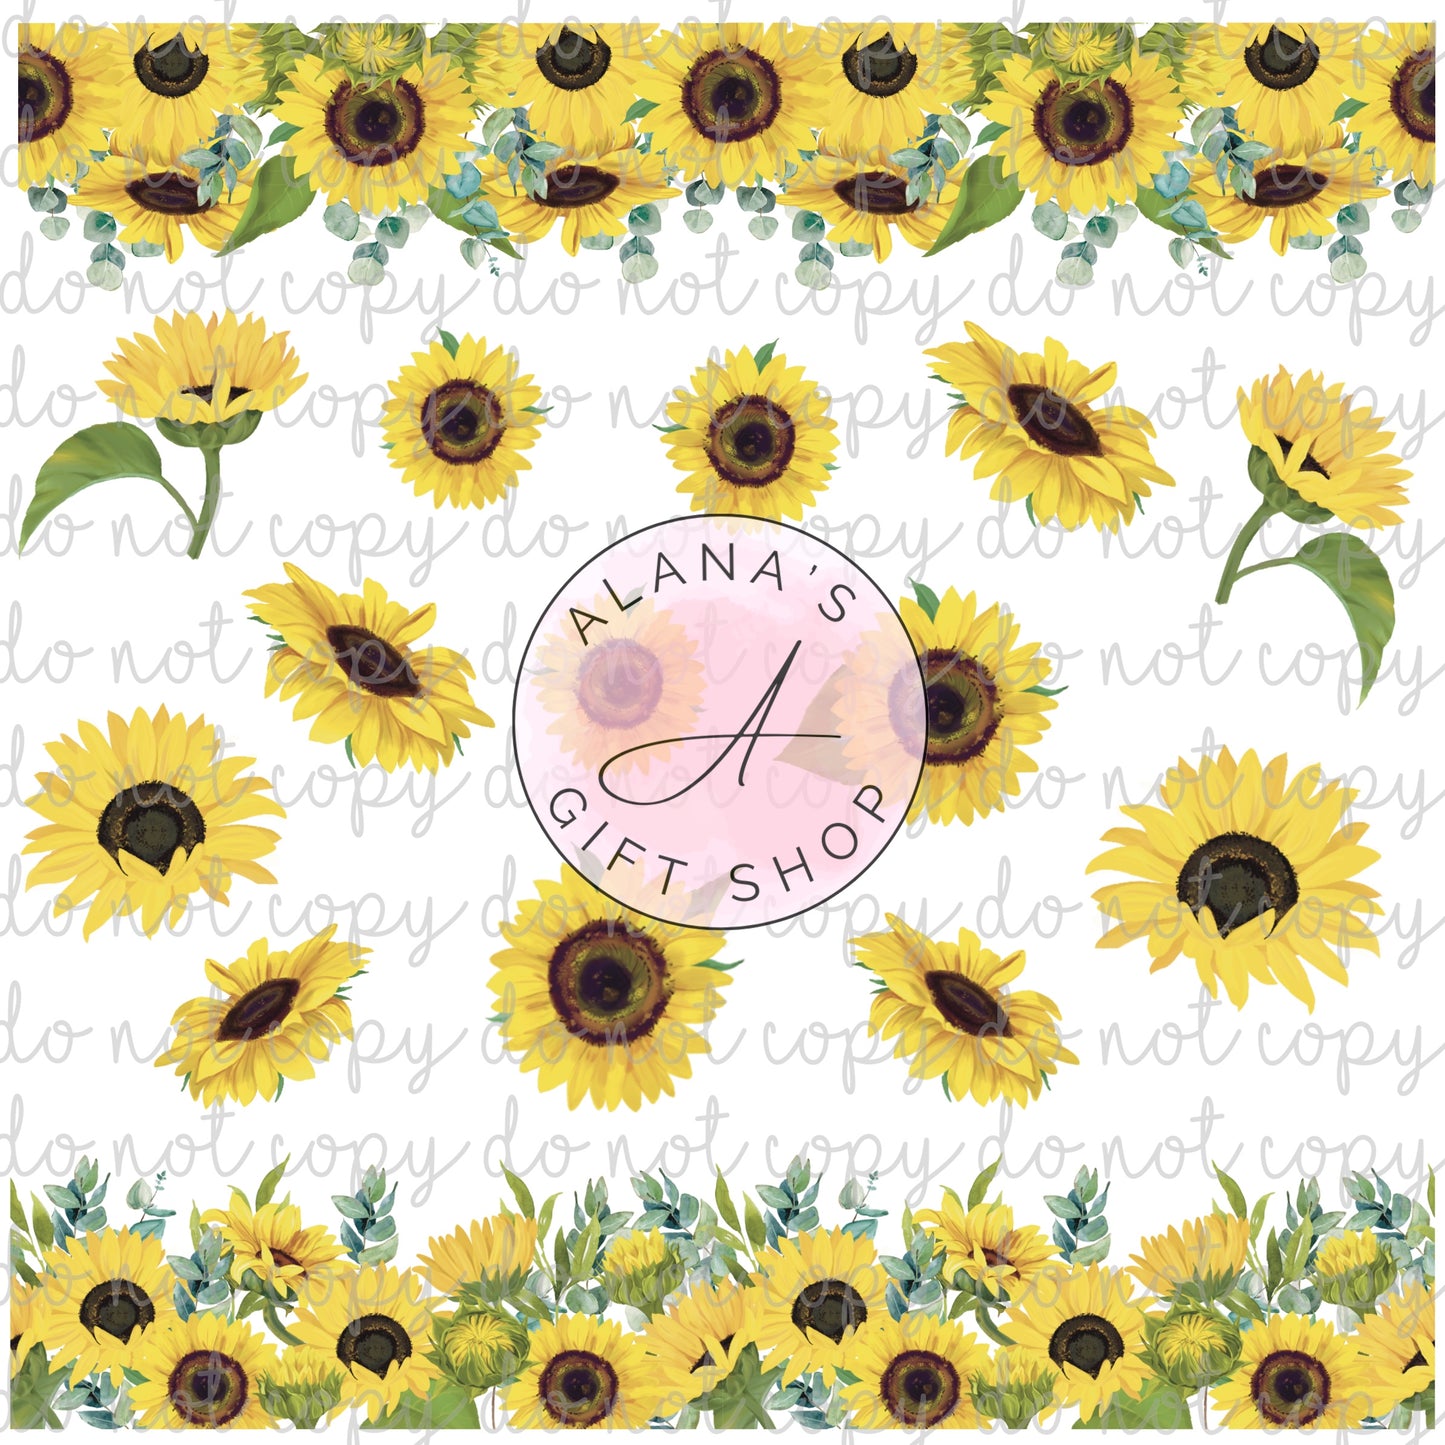 441 Sunflower Elements- Semi-Transparent